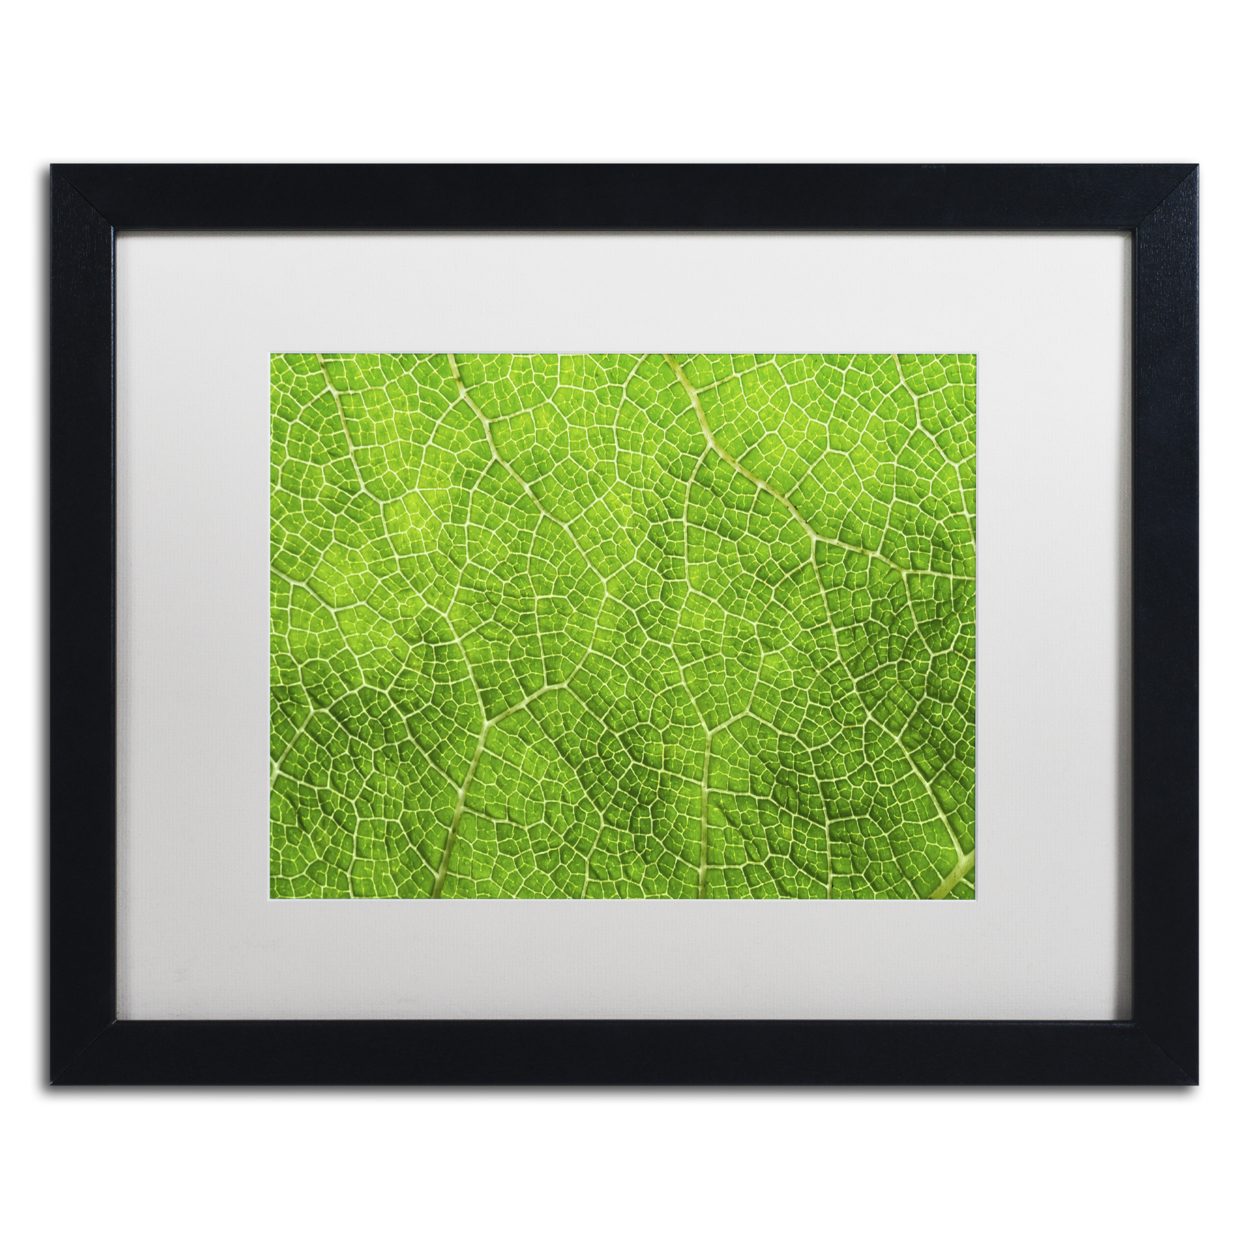 Cora Niele 'Leaf Texture VII' Black Wooden Framed Art 18 X 22 Inches